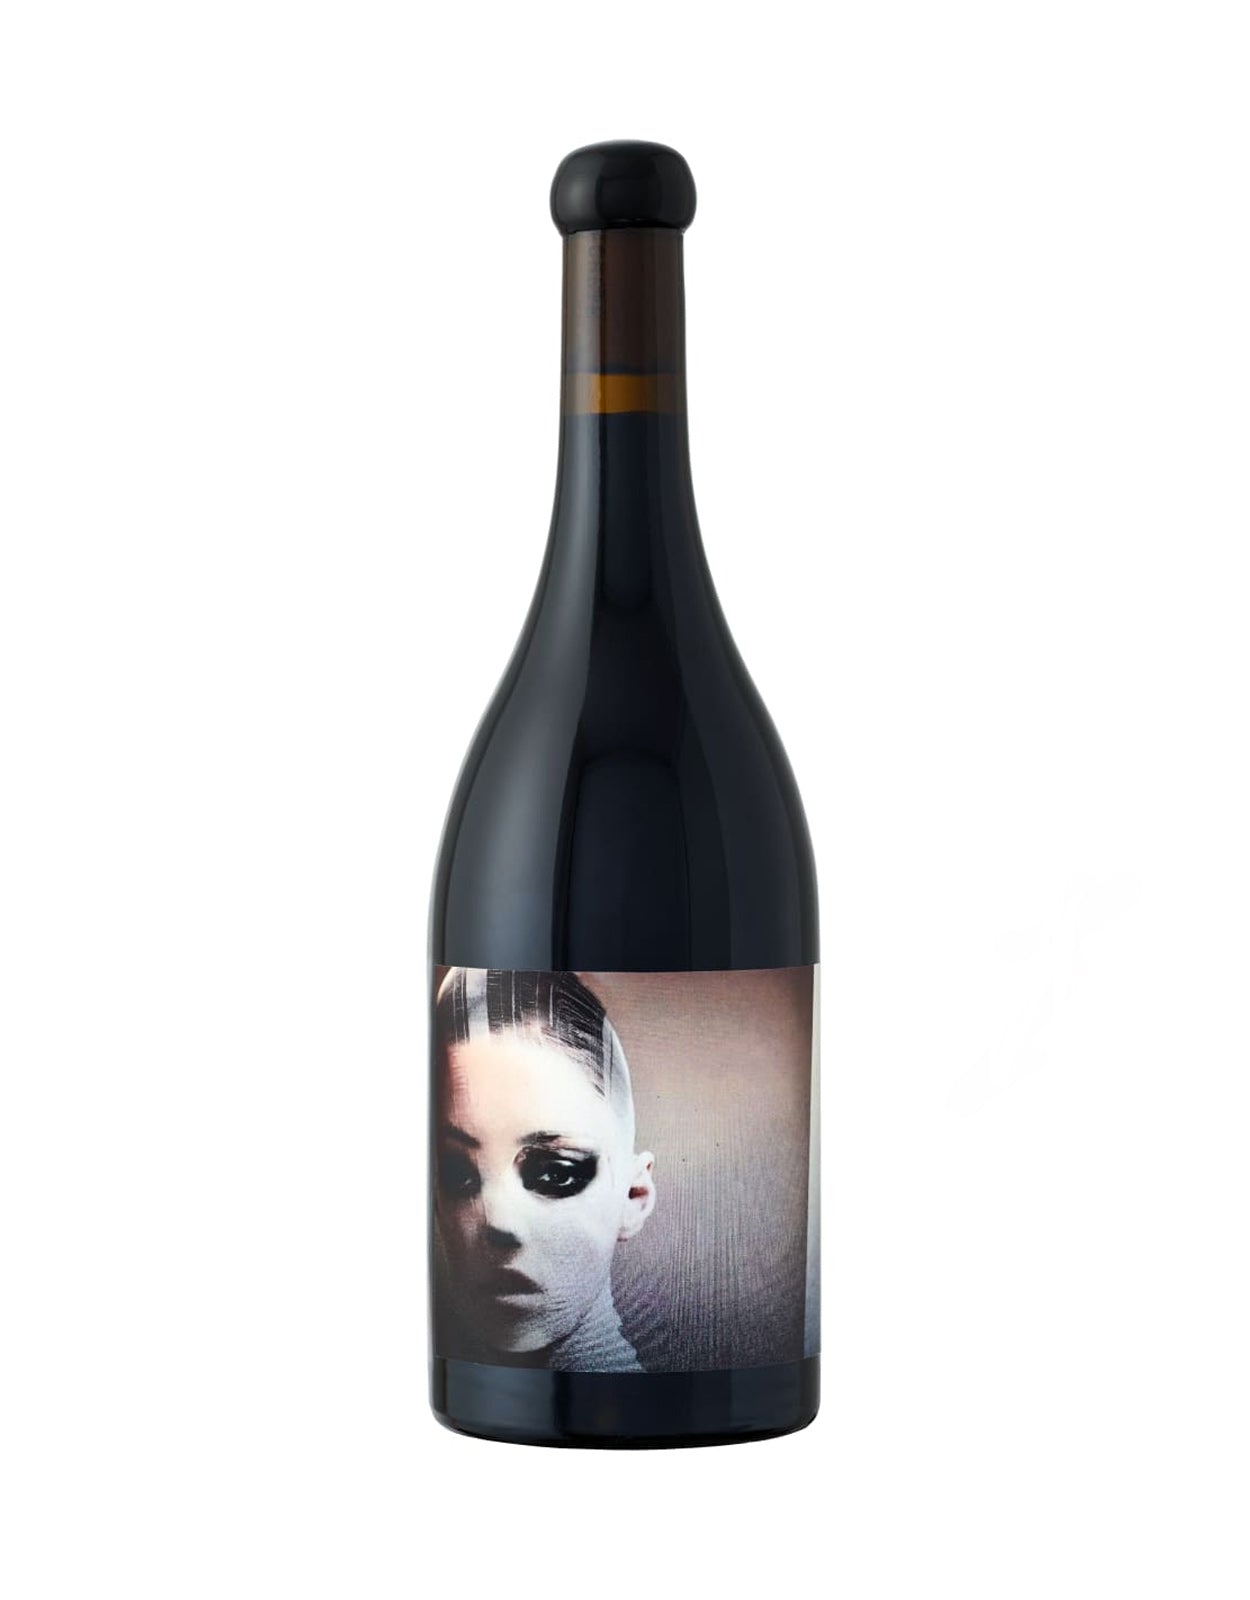 L'Usine Cellars Sleepy Hollow Vineyard Pinot Noir 2019 (Orin Swift)